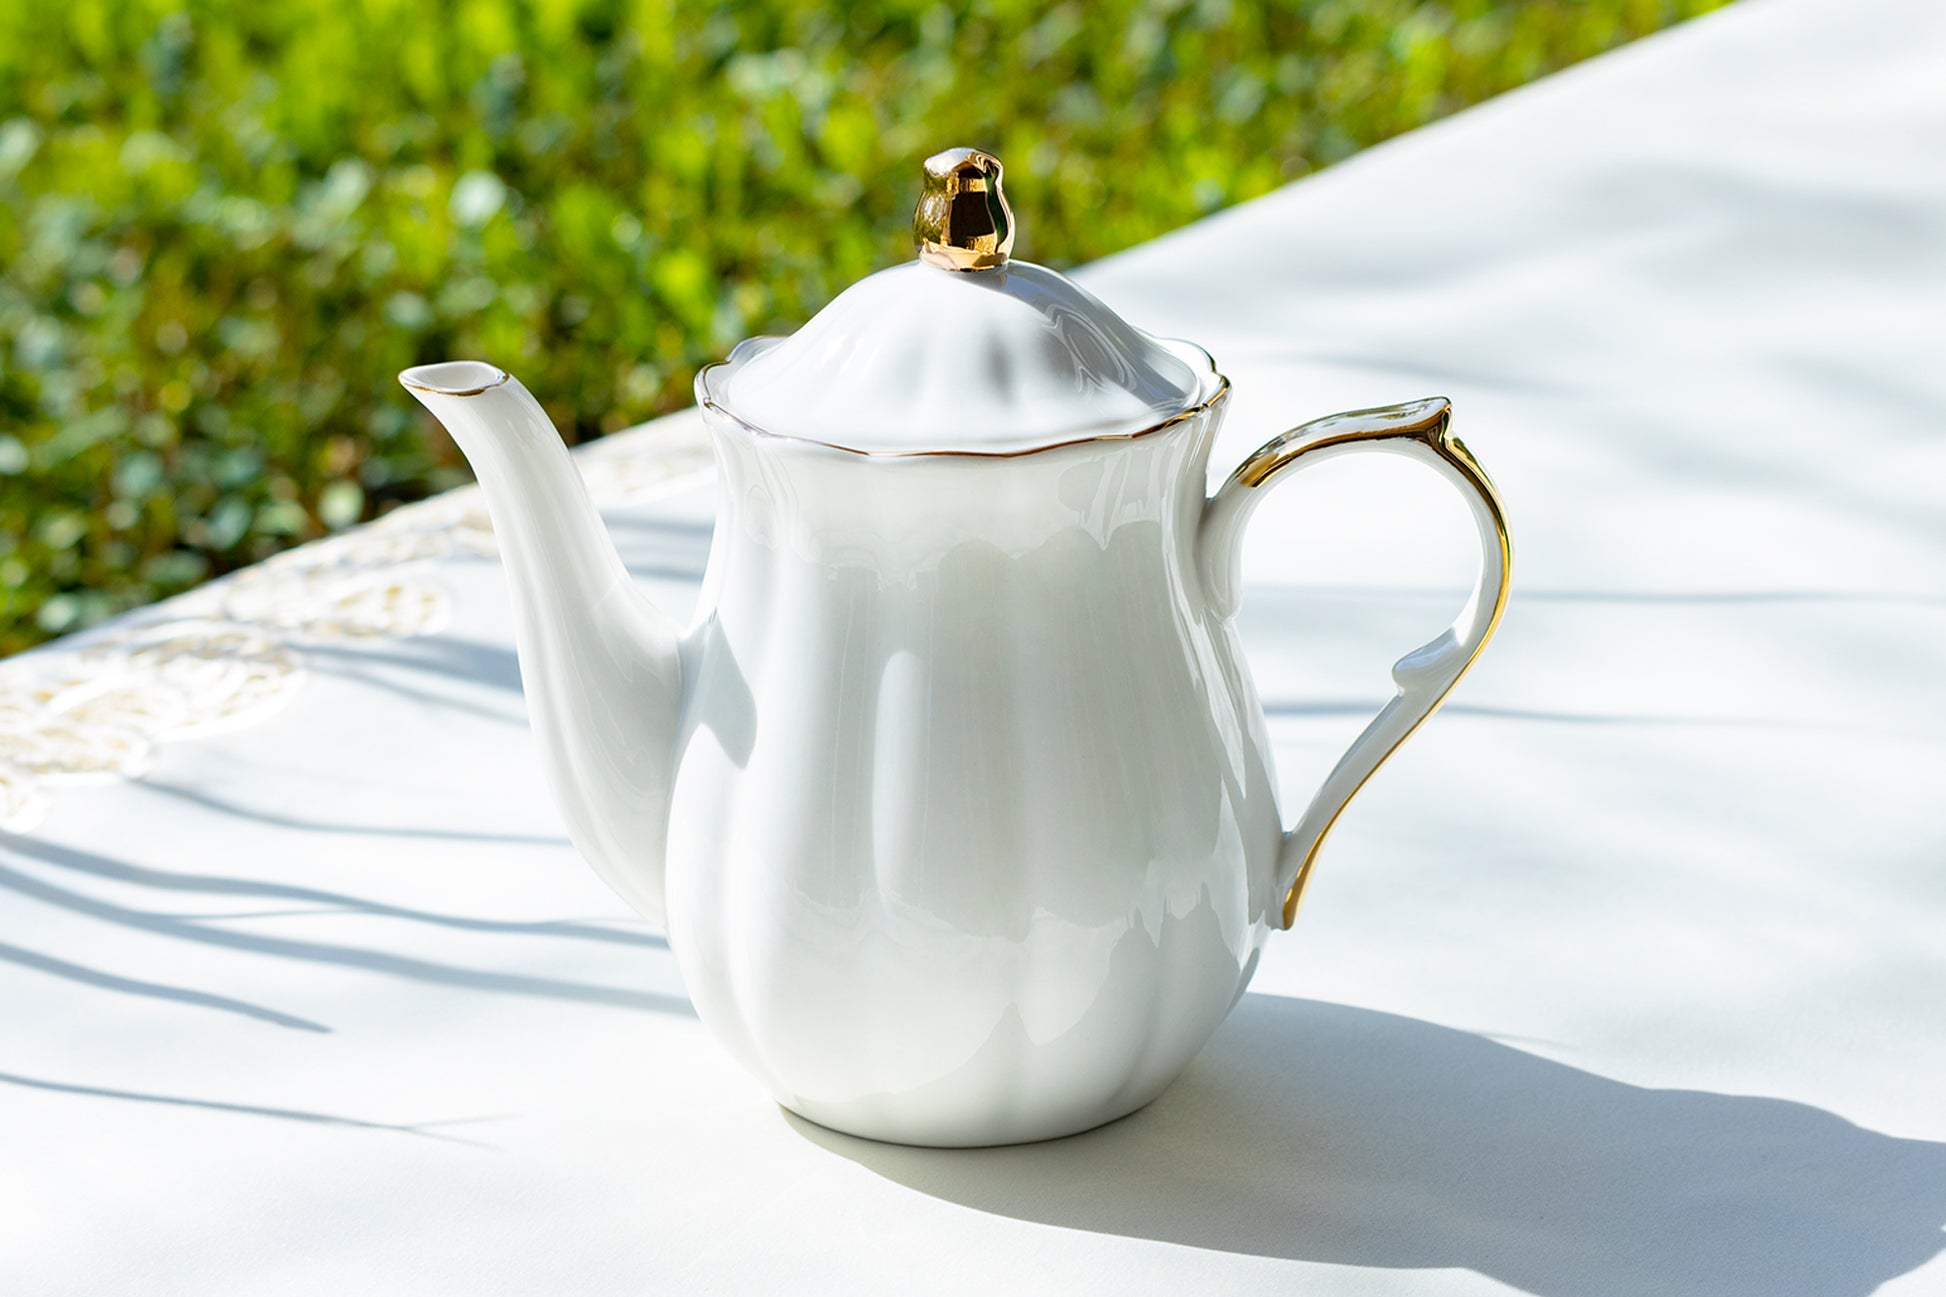 White Gold Scallop Fine Porcelain Teapot